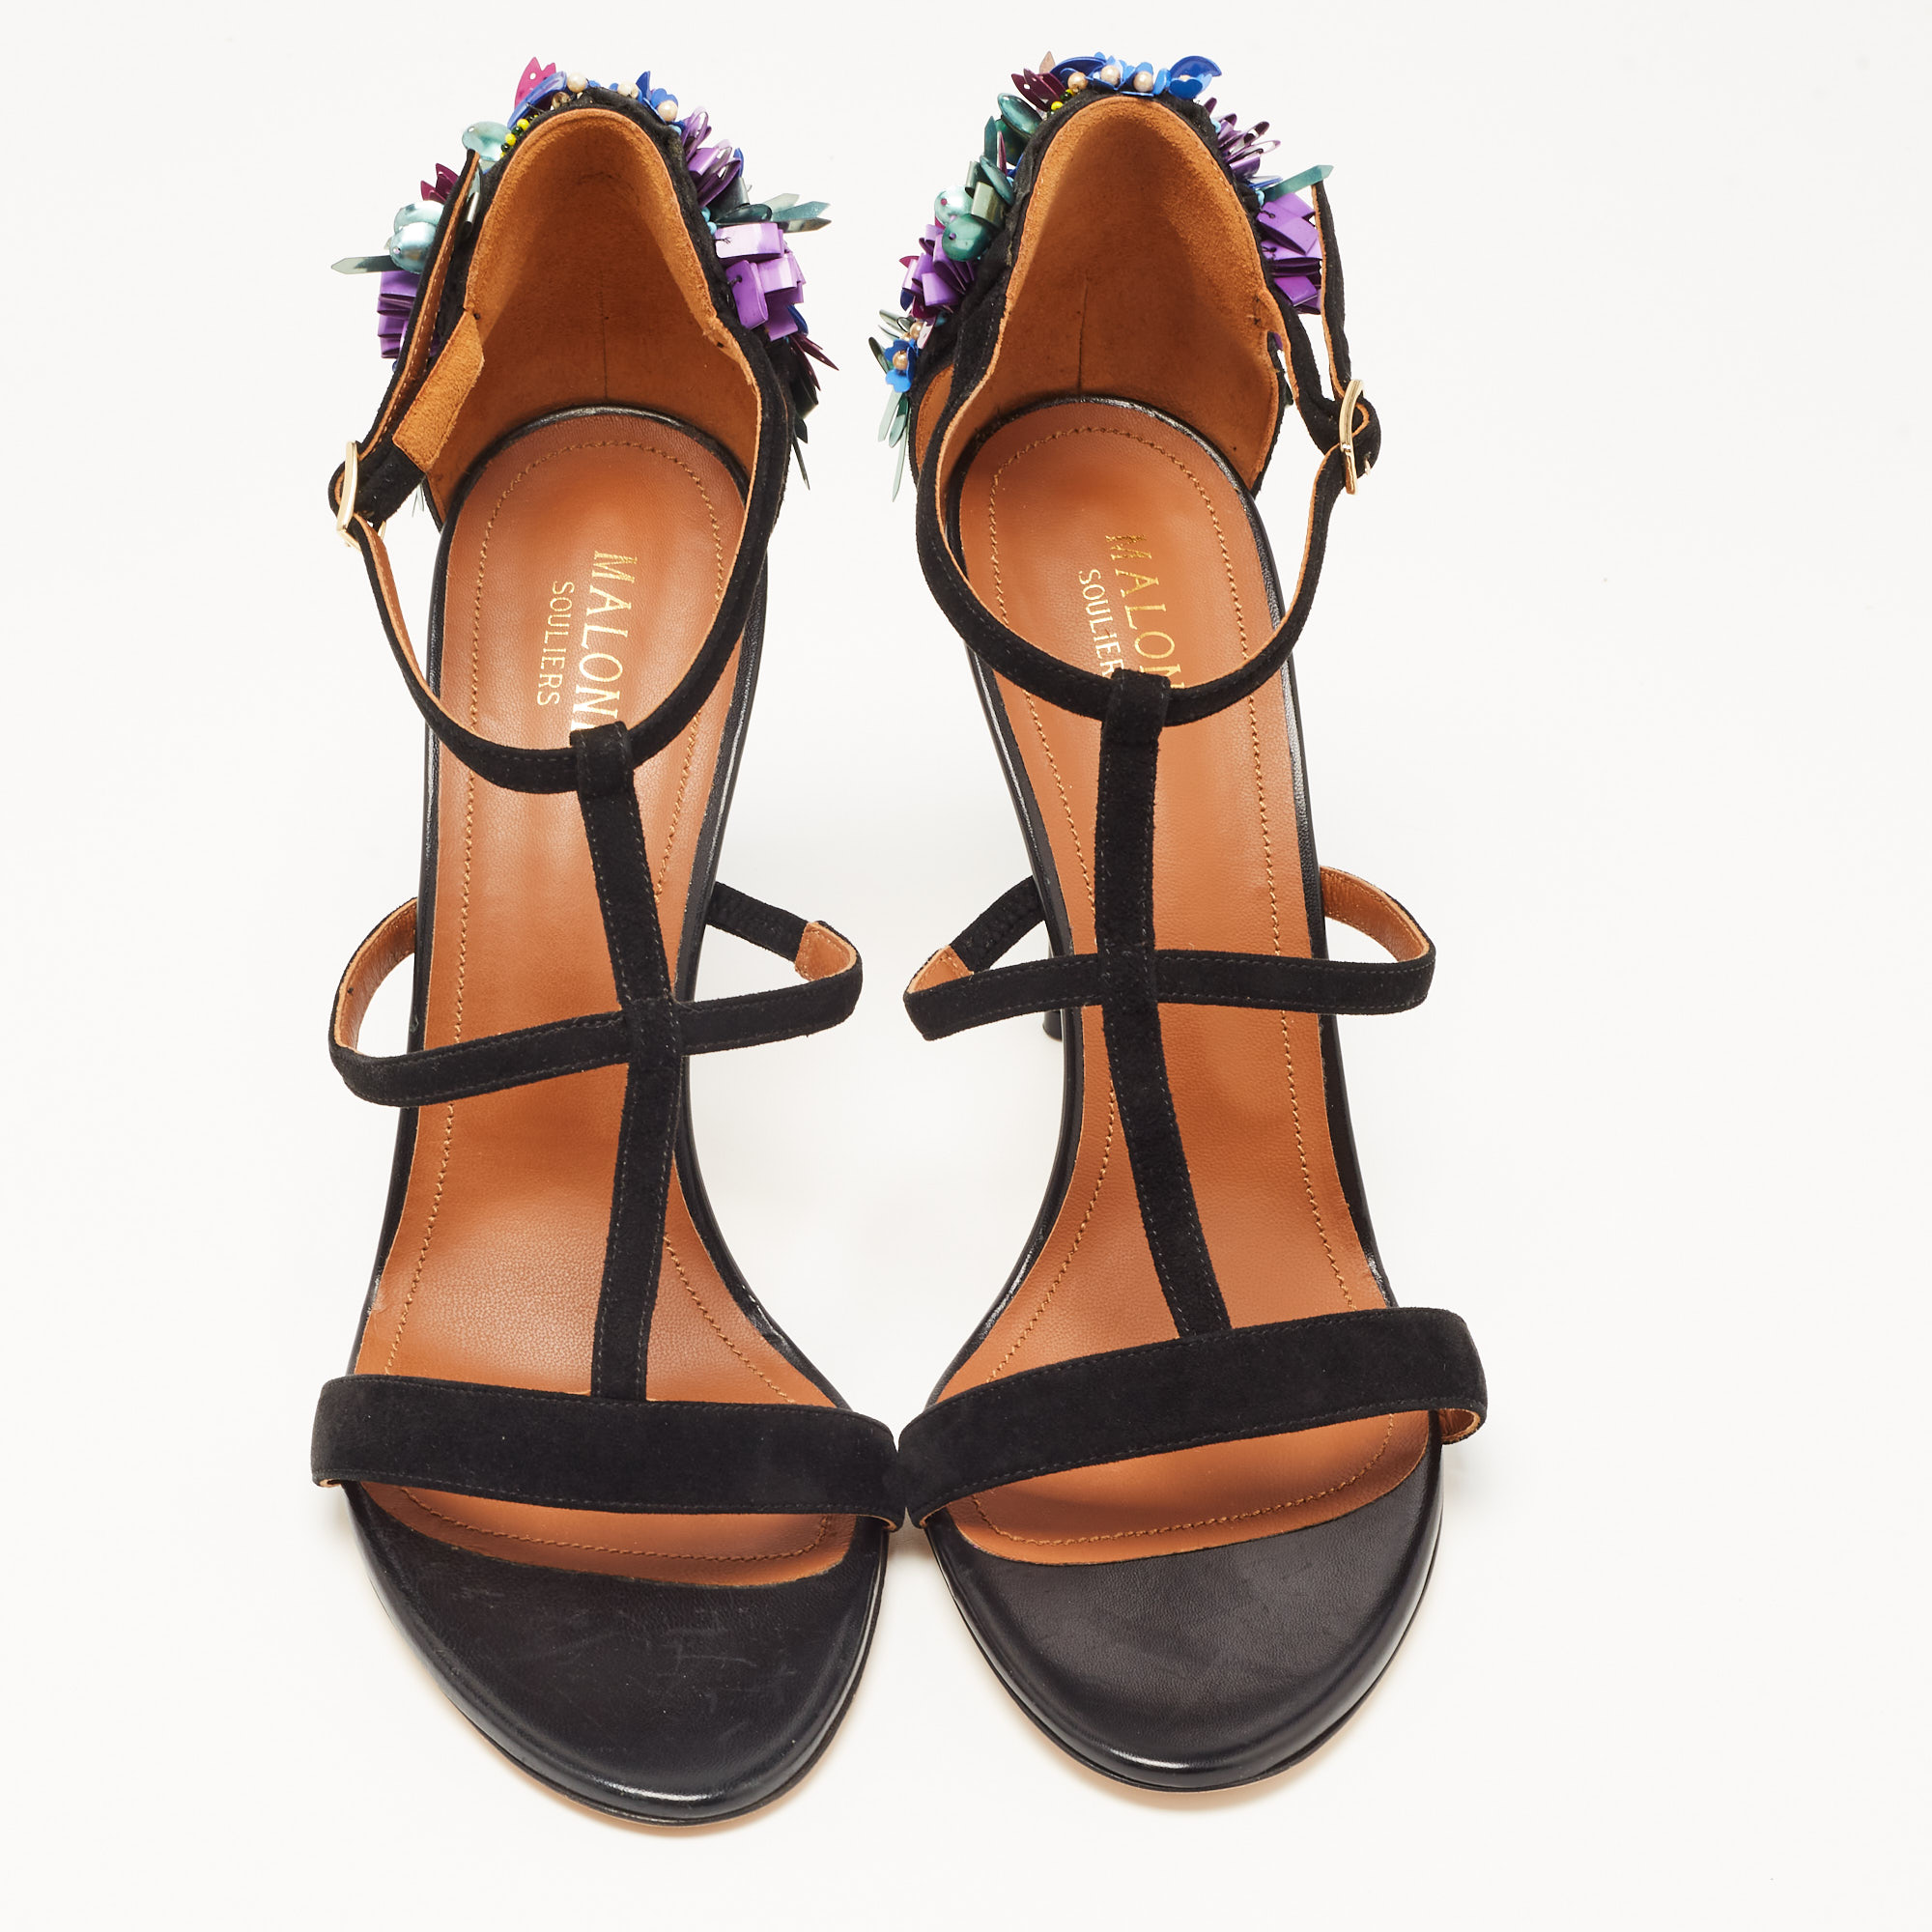 Malone Souliers Black Suede Floral Embellished Ankle Strap Sandals Size 41